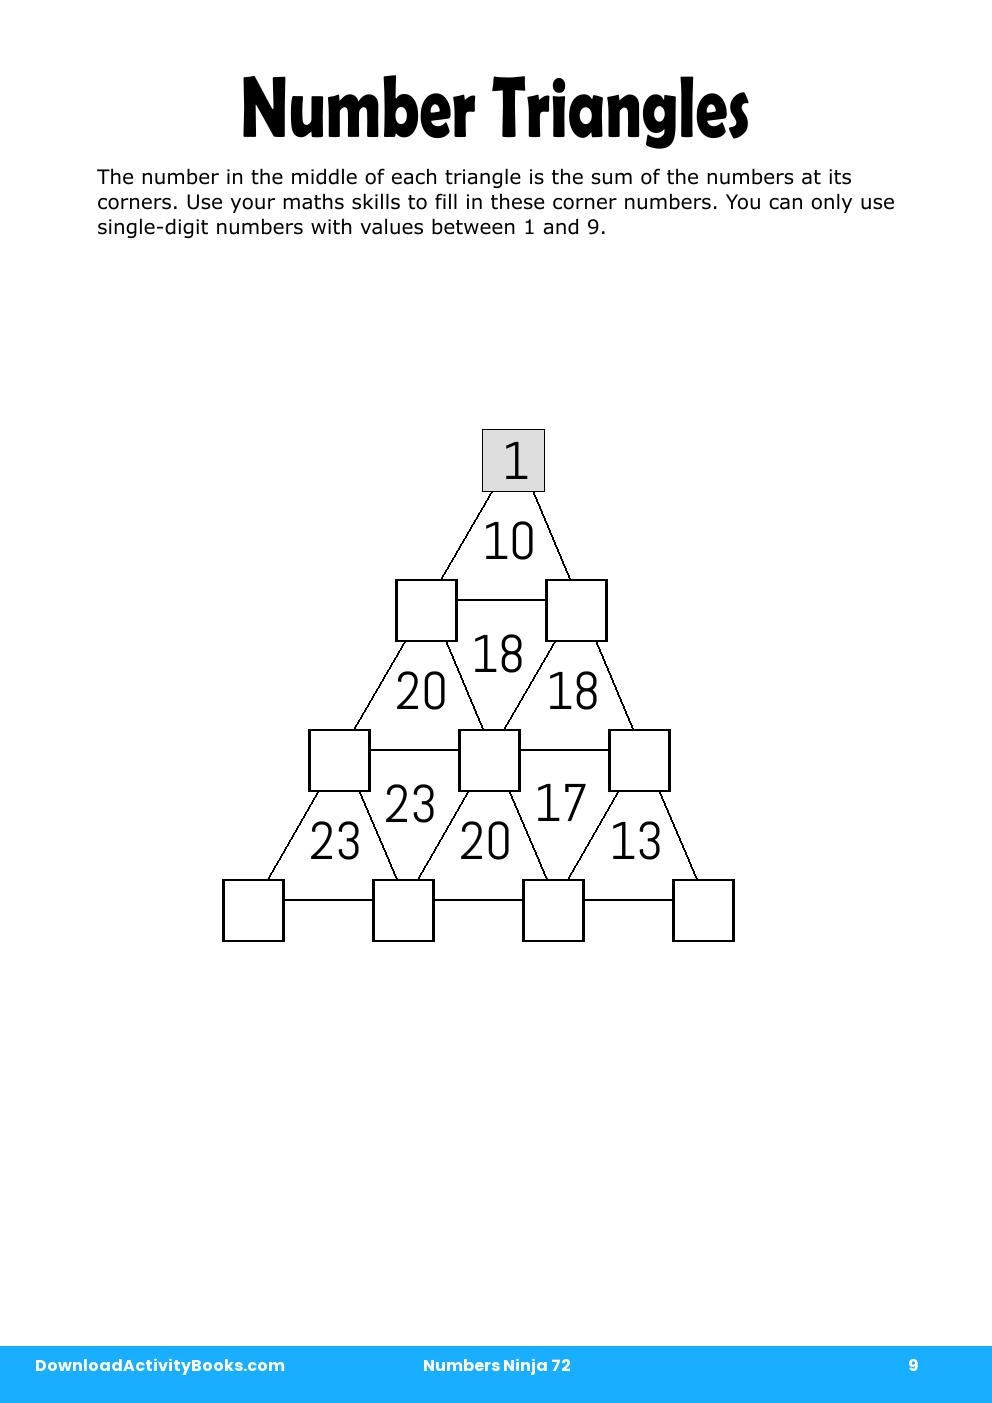 Number Triangles in Numbers Ninja 72